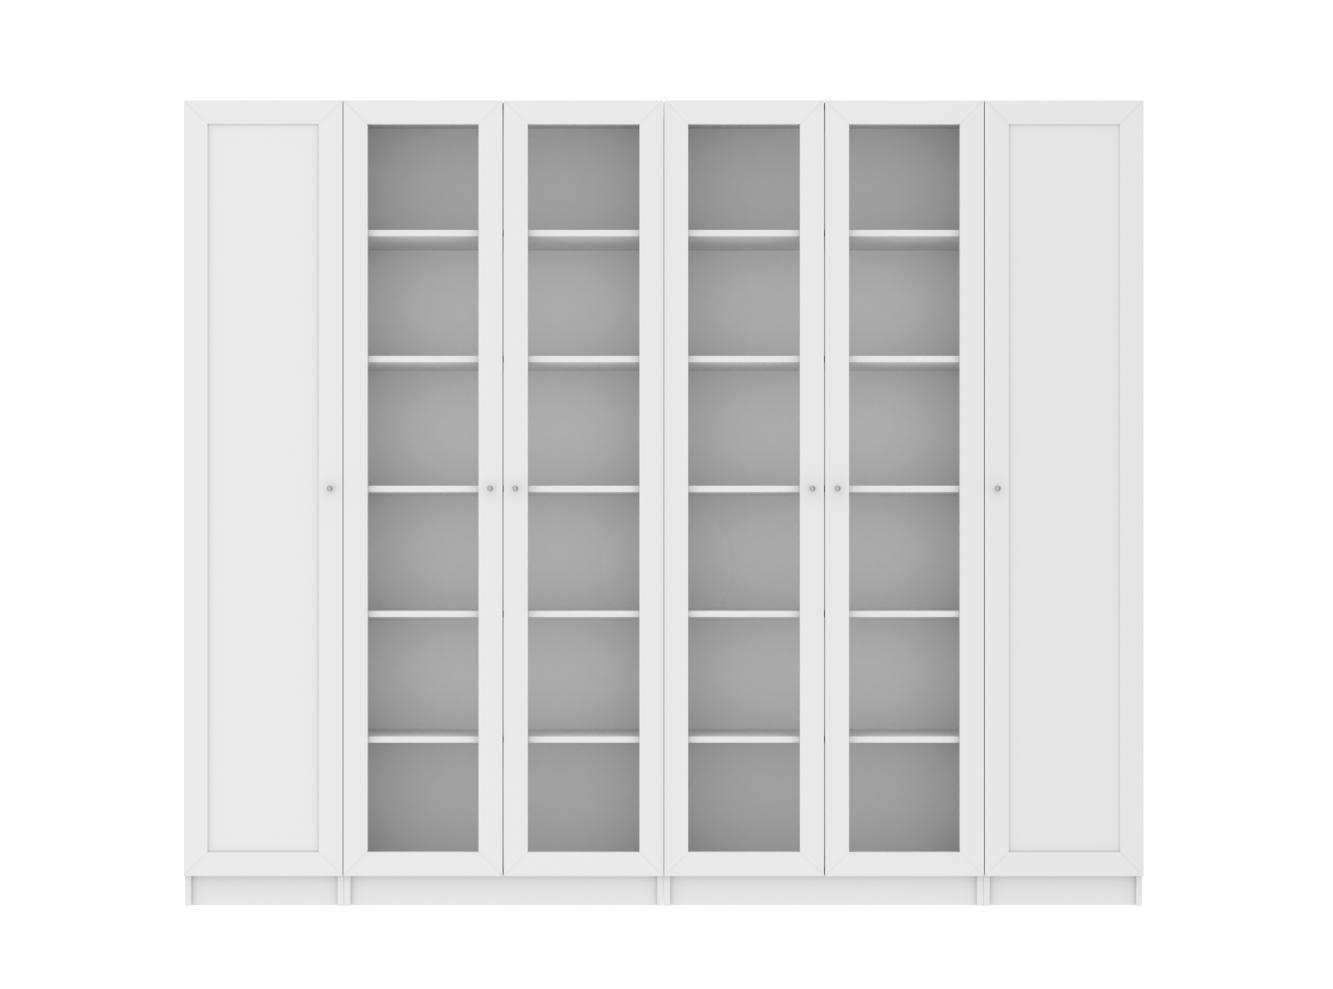  Книжный шкаф Билли 416 white ИКЕА (IKEA) изображение товара